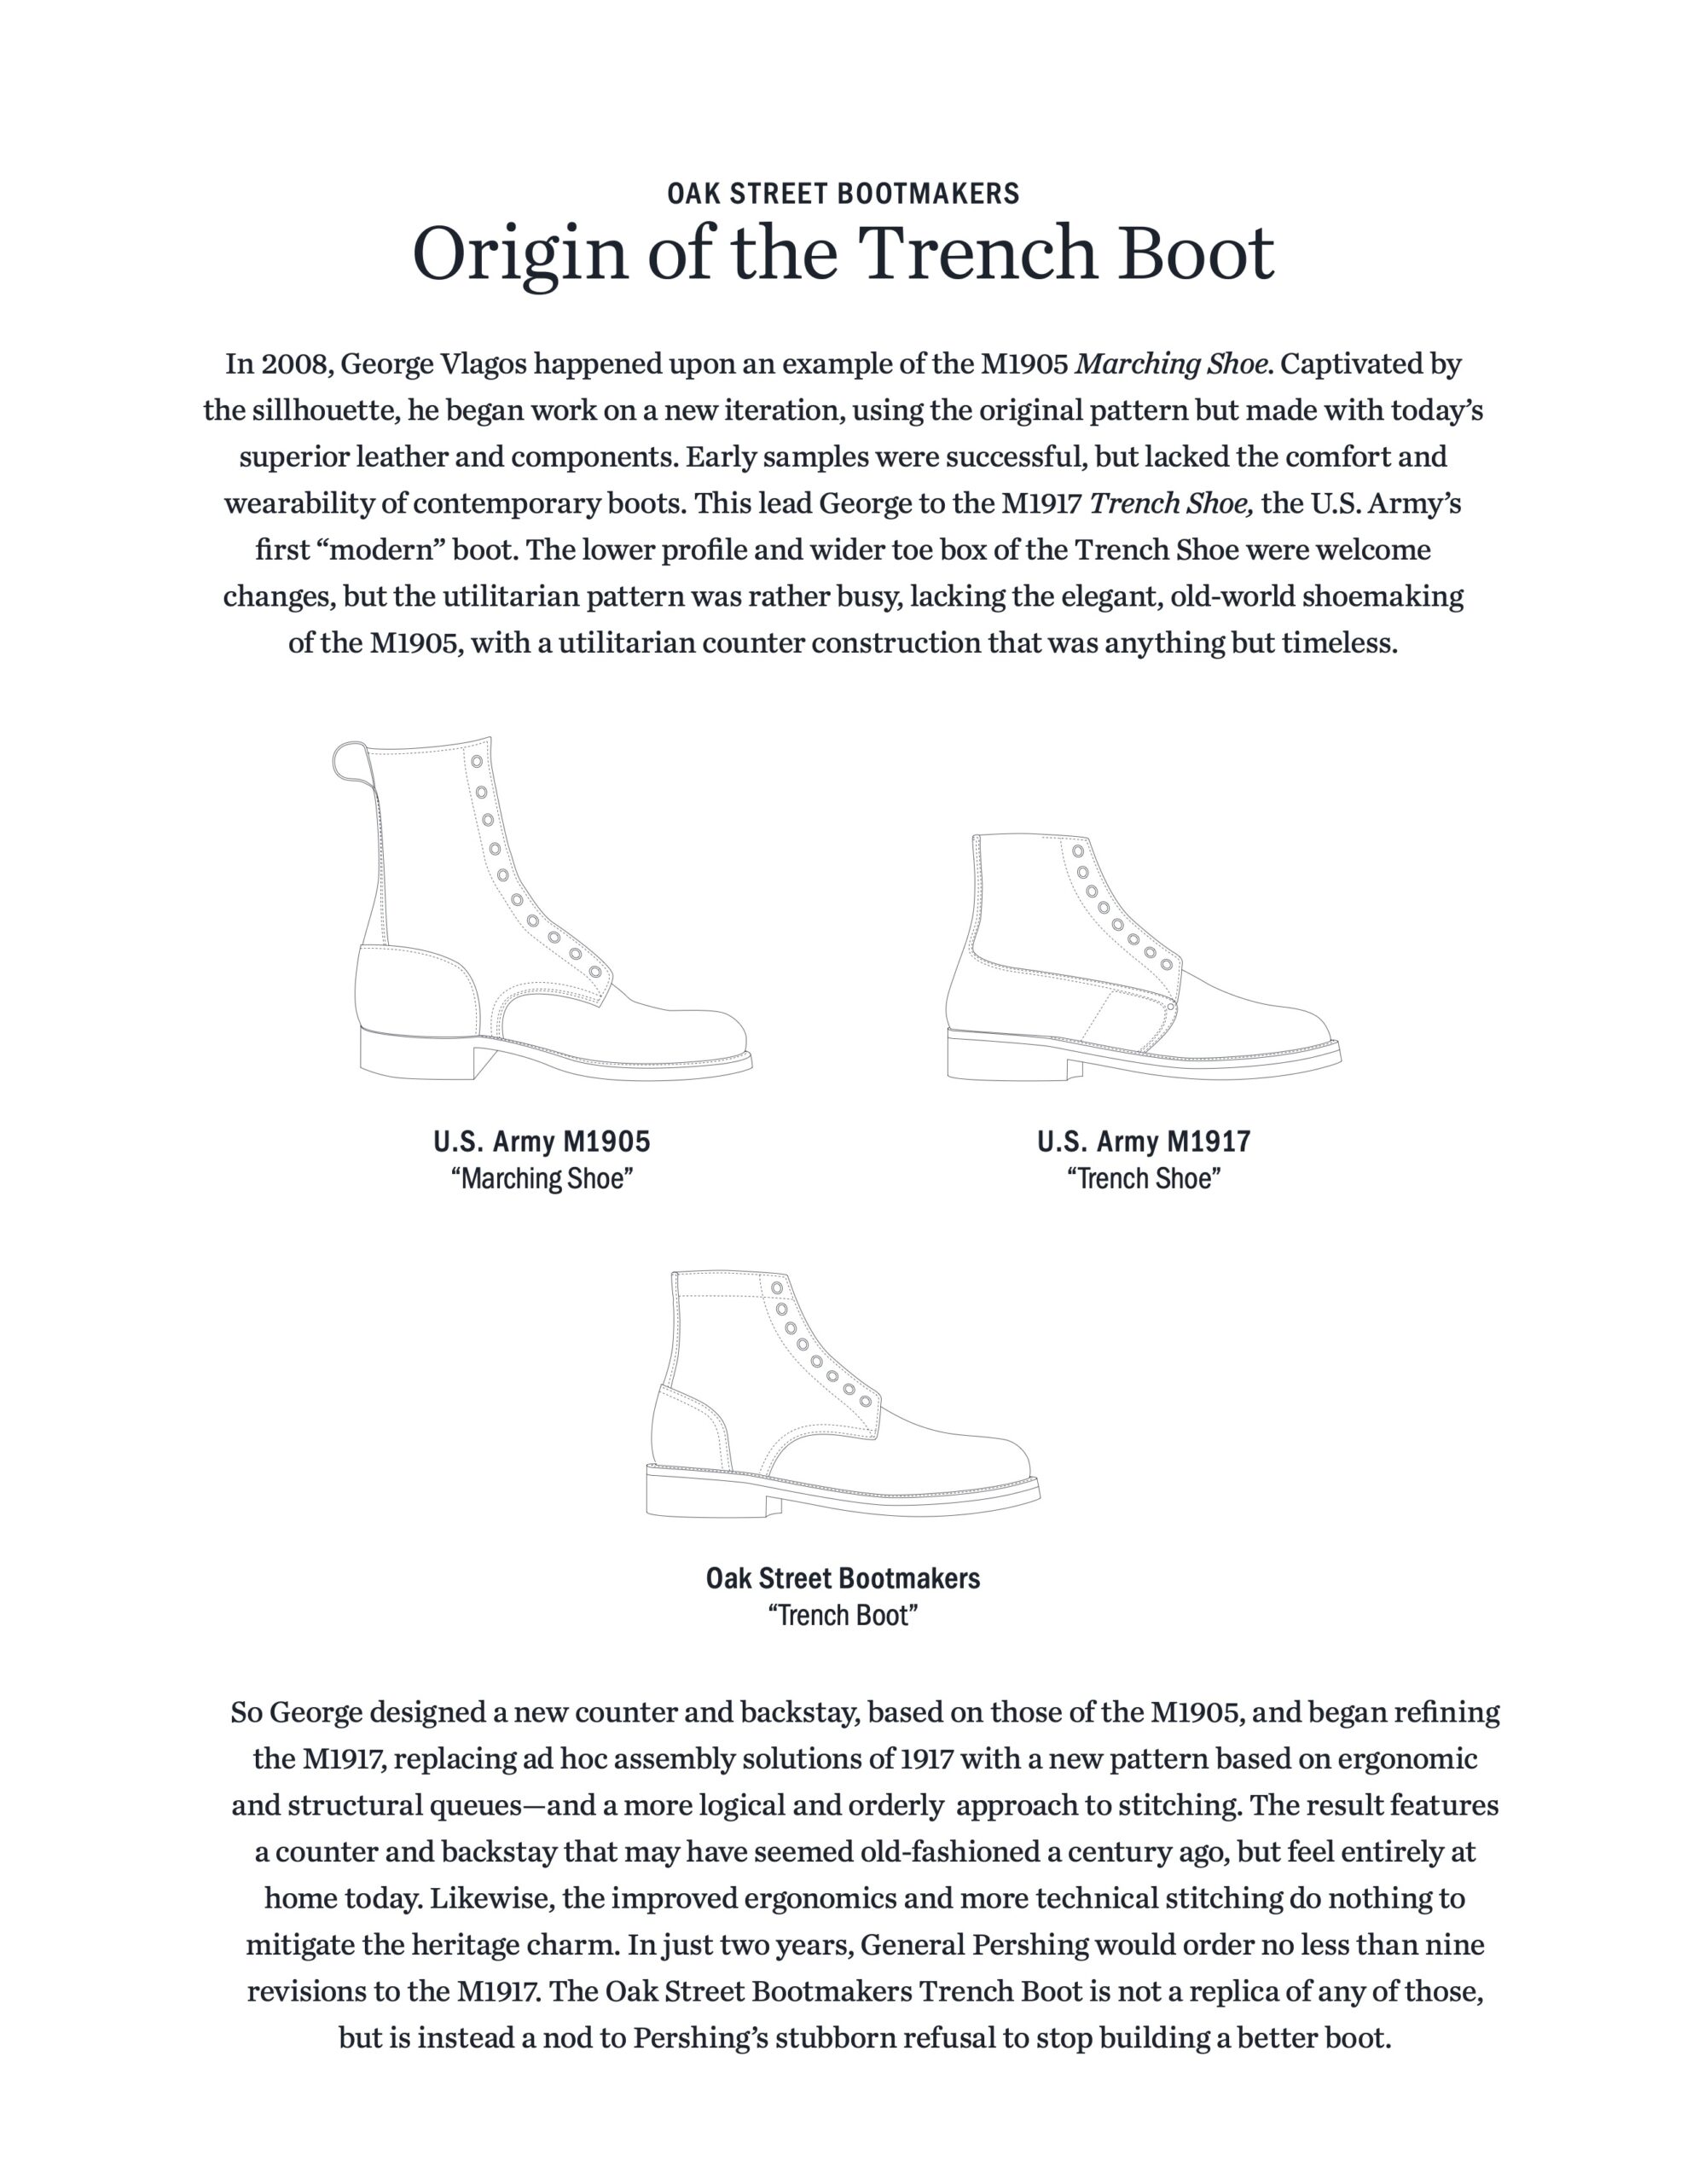 oak street bootmakers trench boot evolution